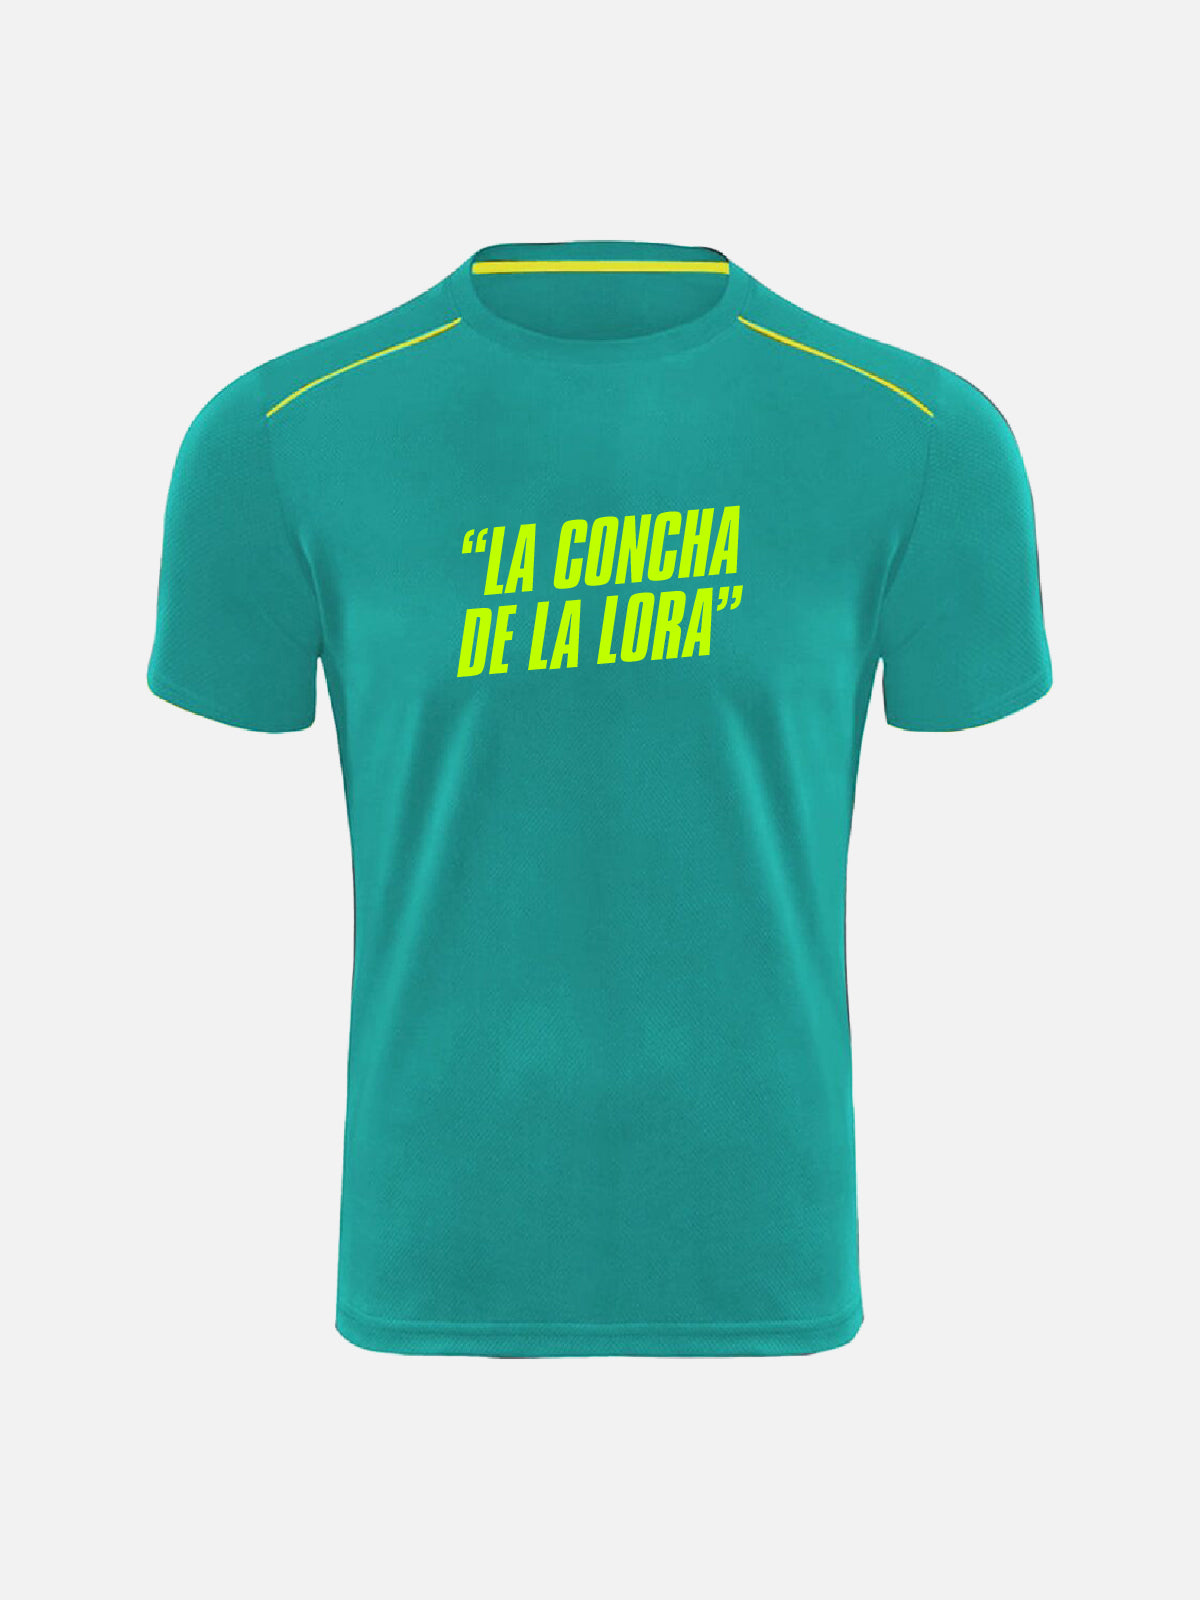 Personalized T-shirt - “La Concha De La Lora”